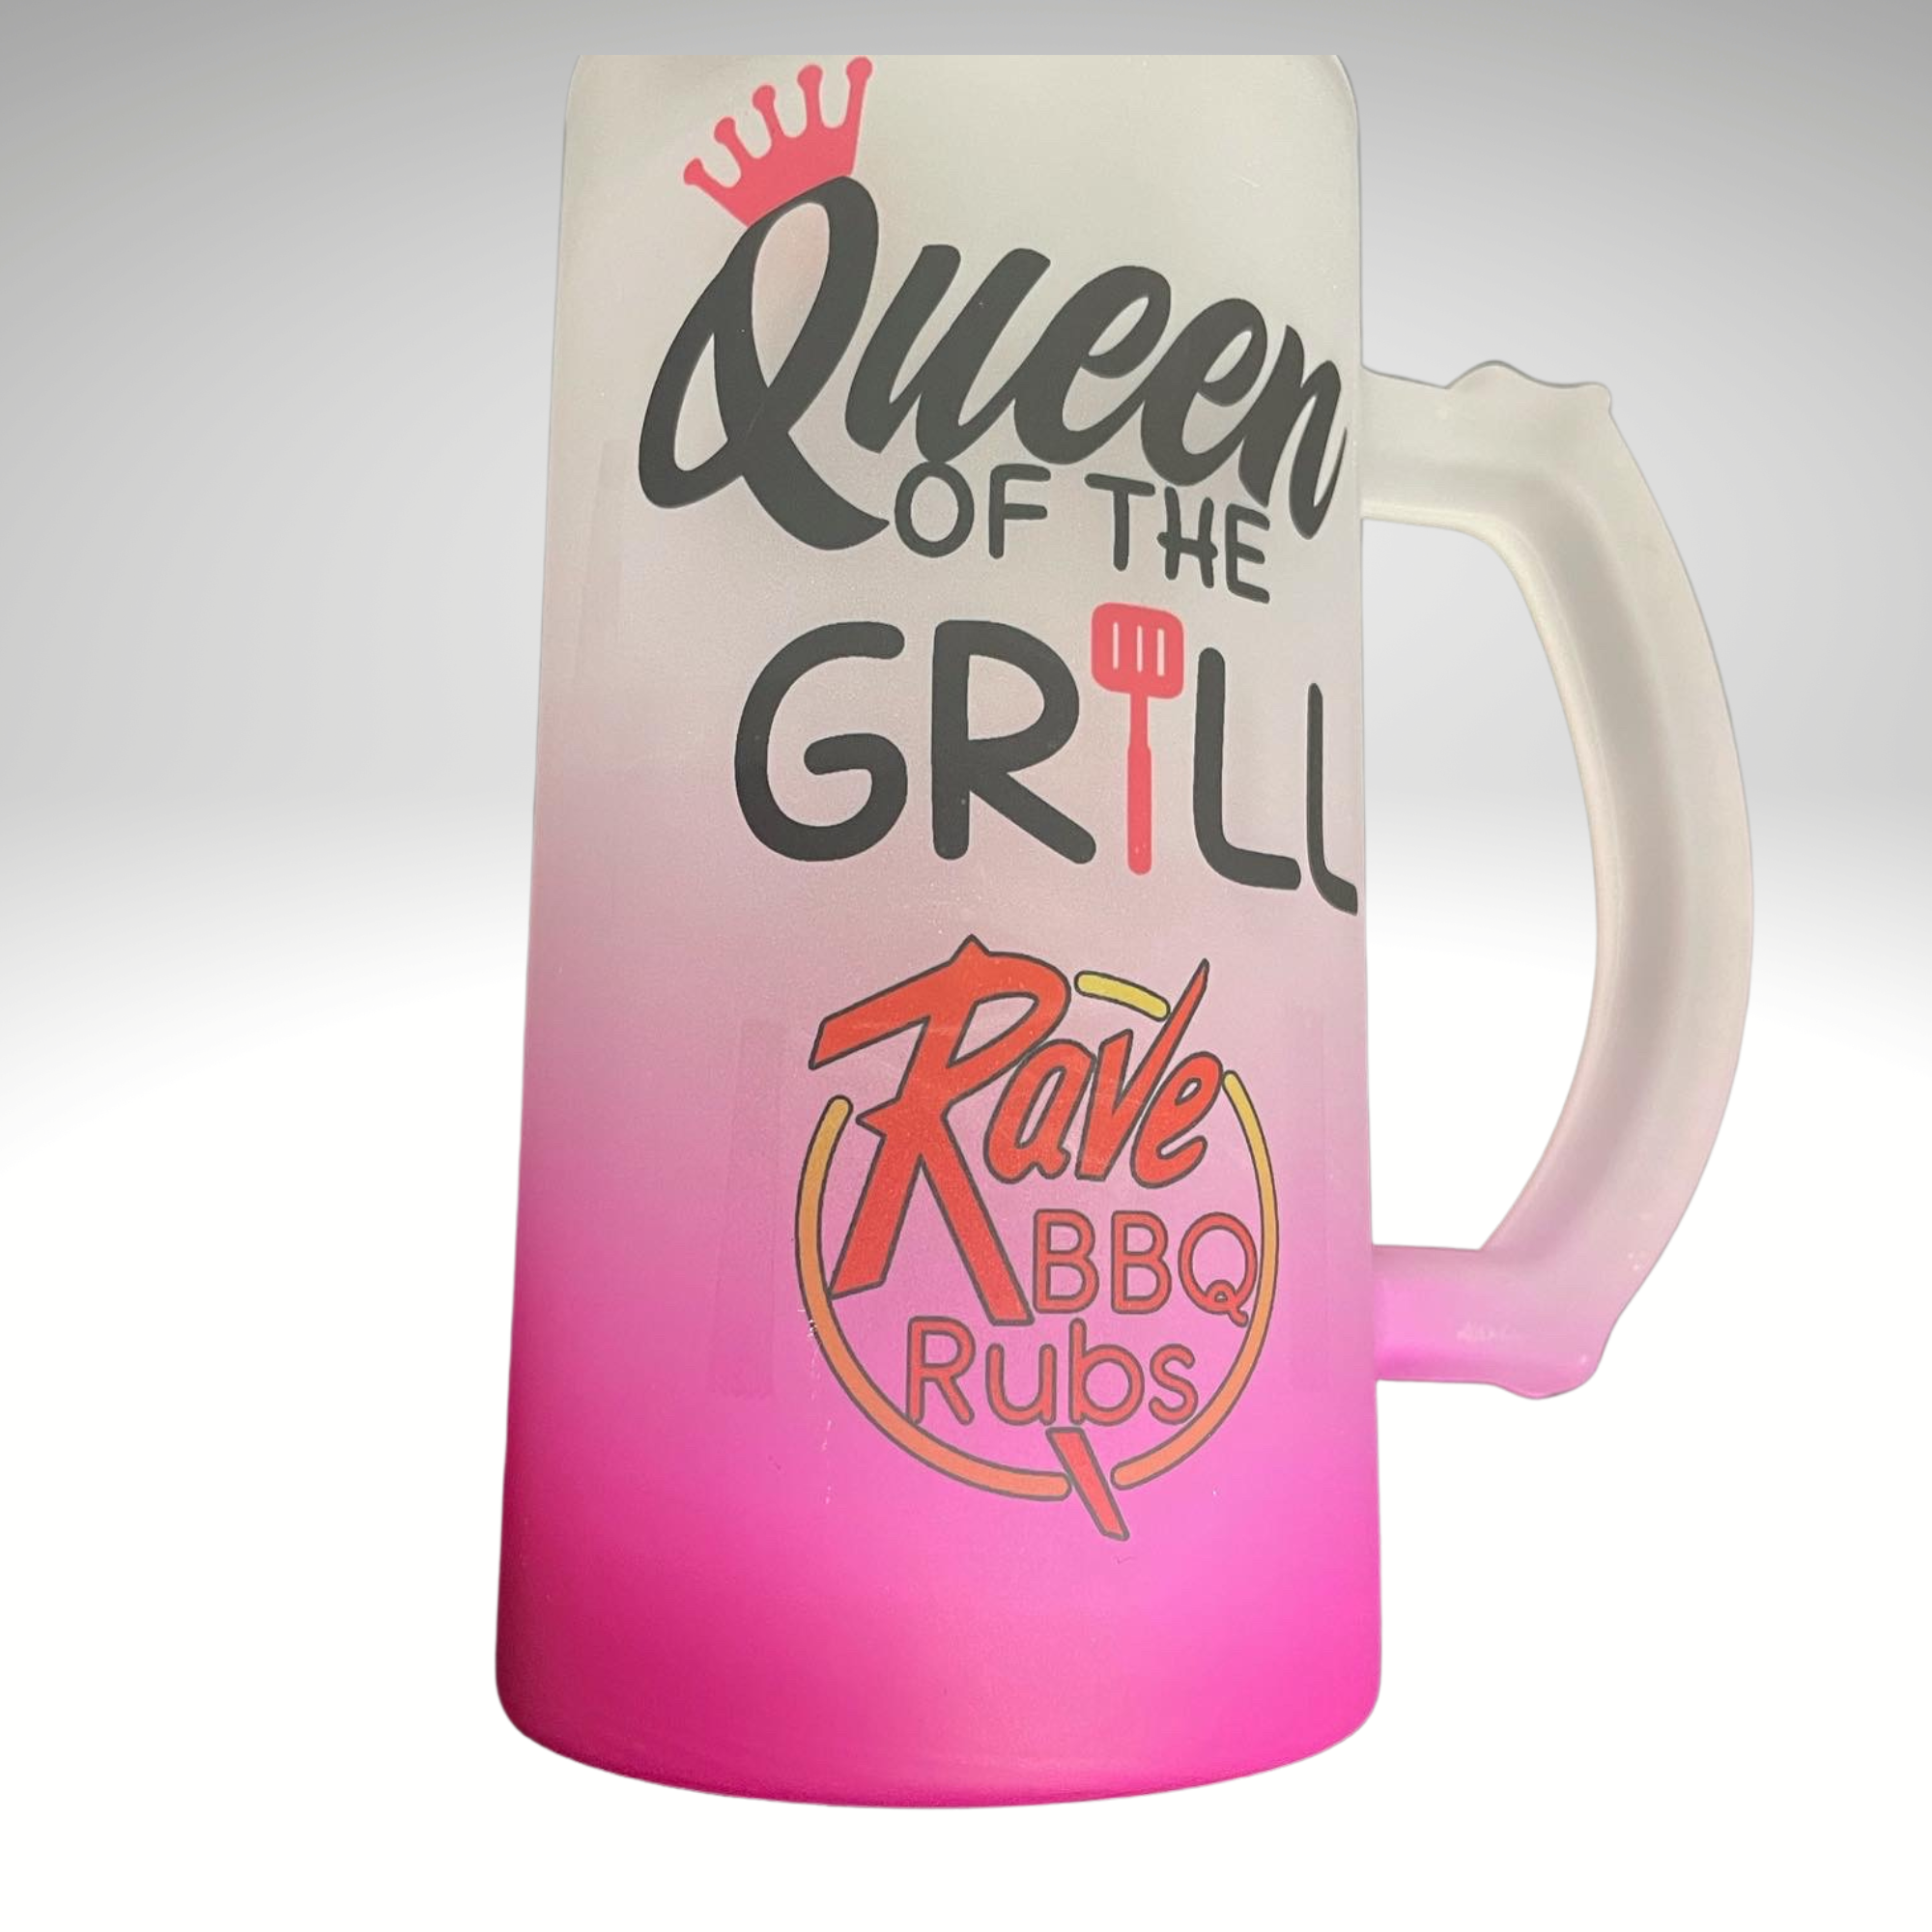 Queen of the Grill Beer Mug